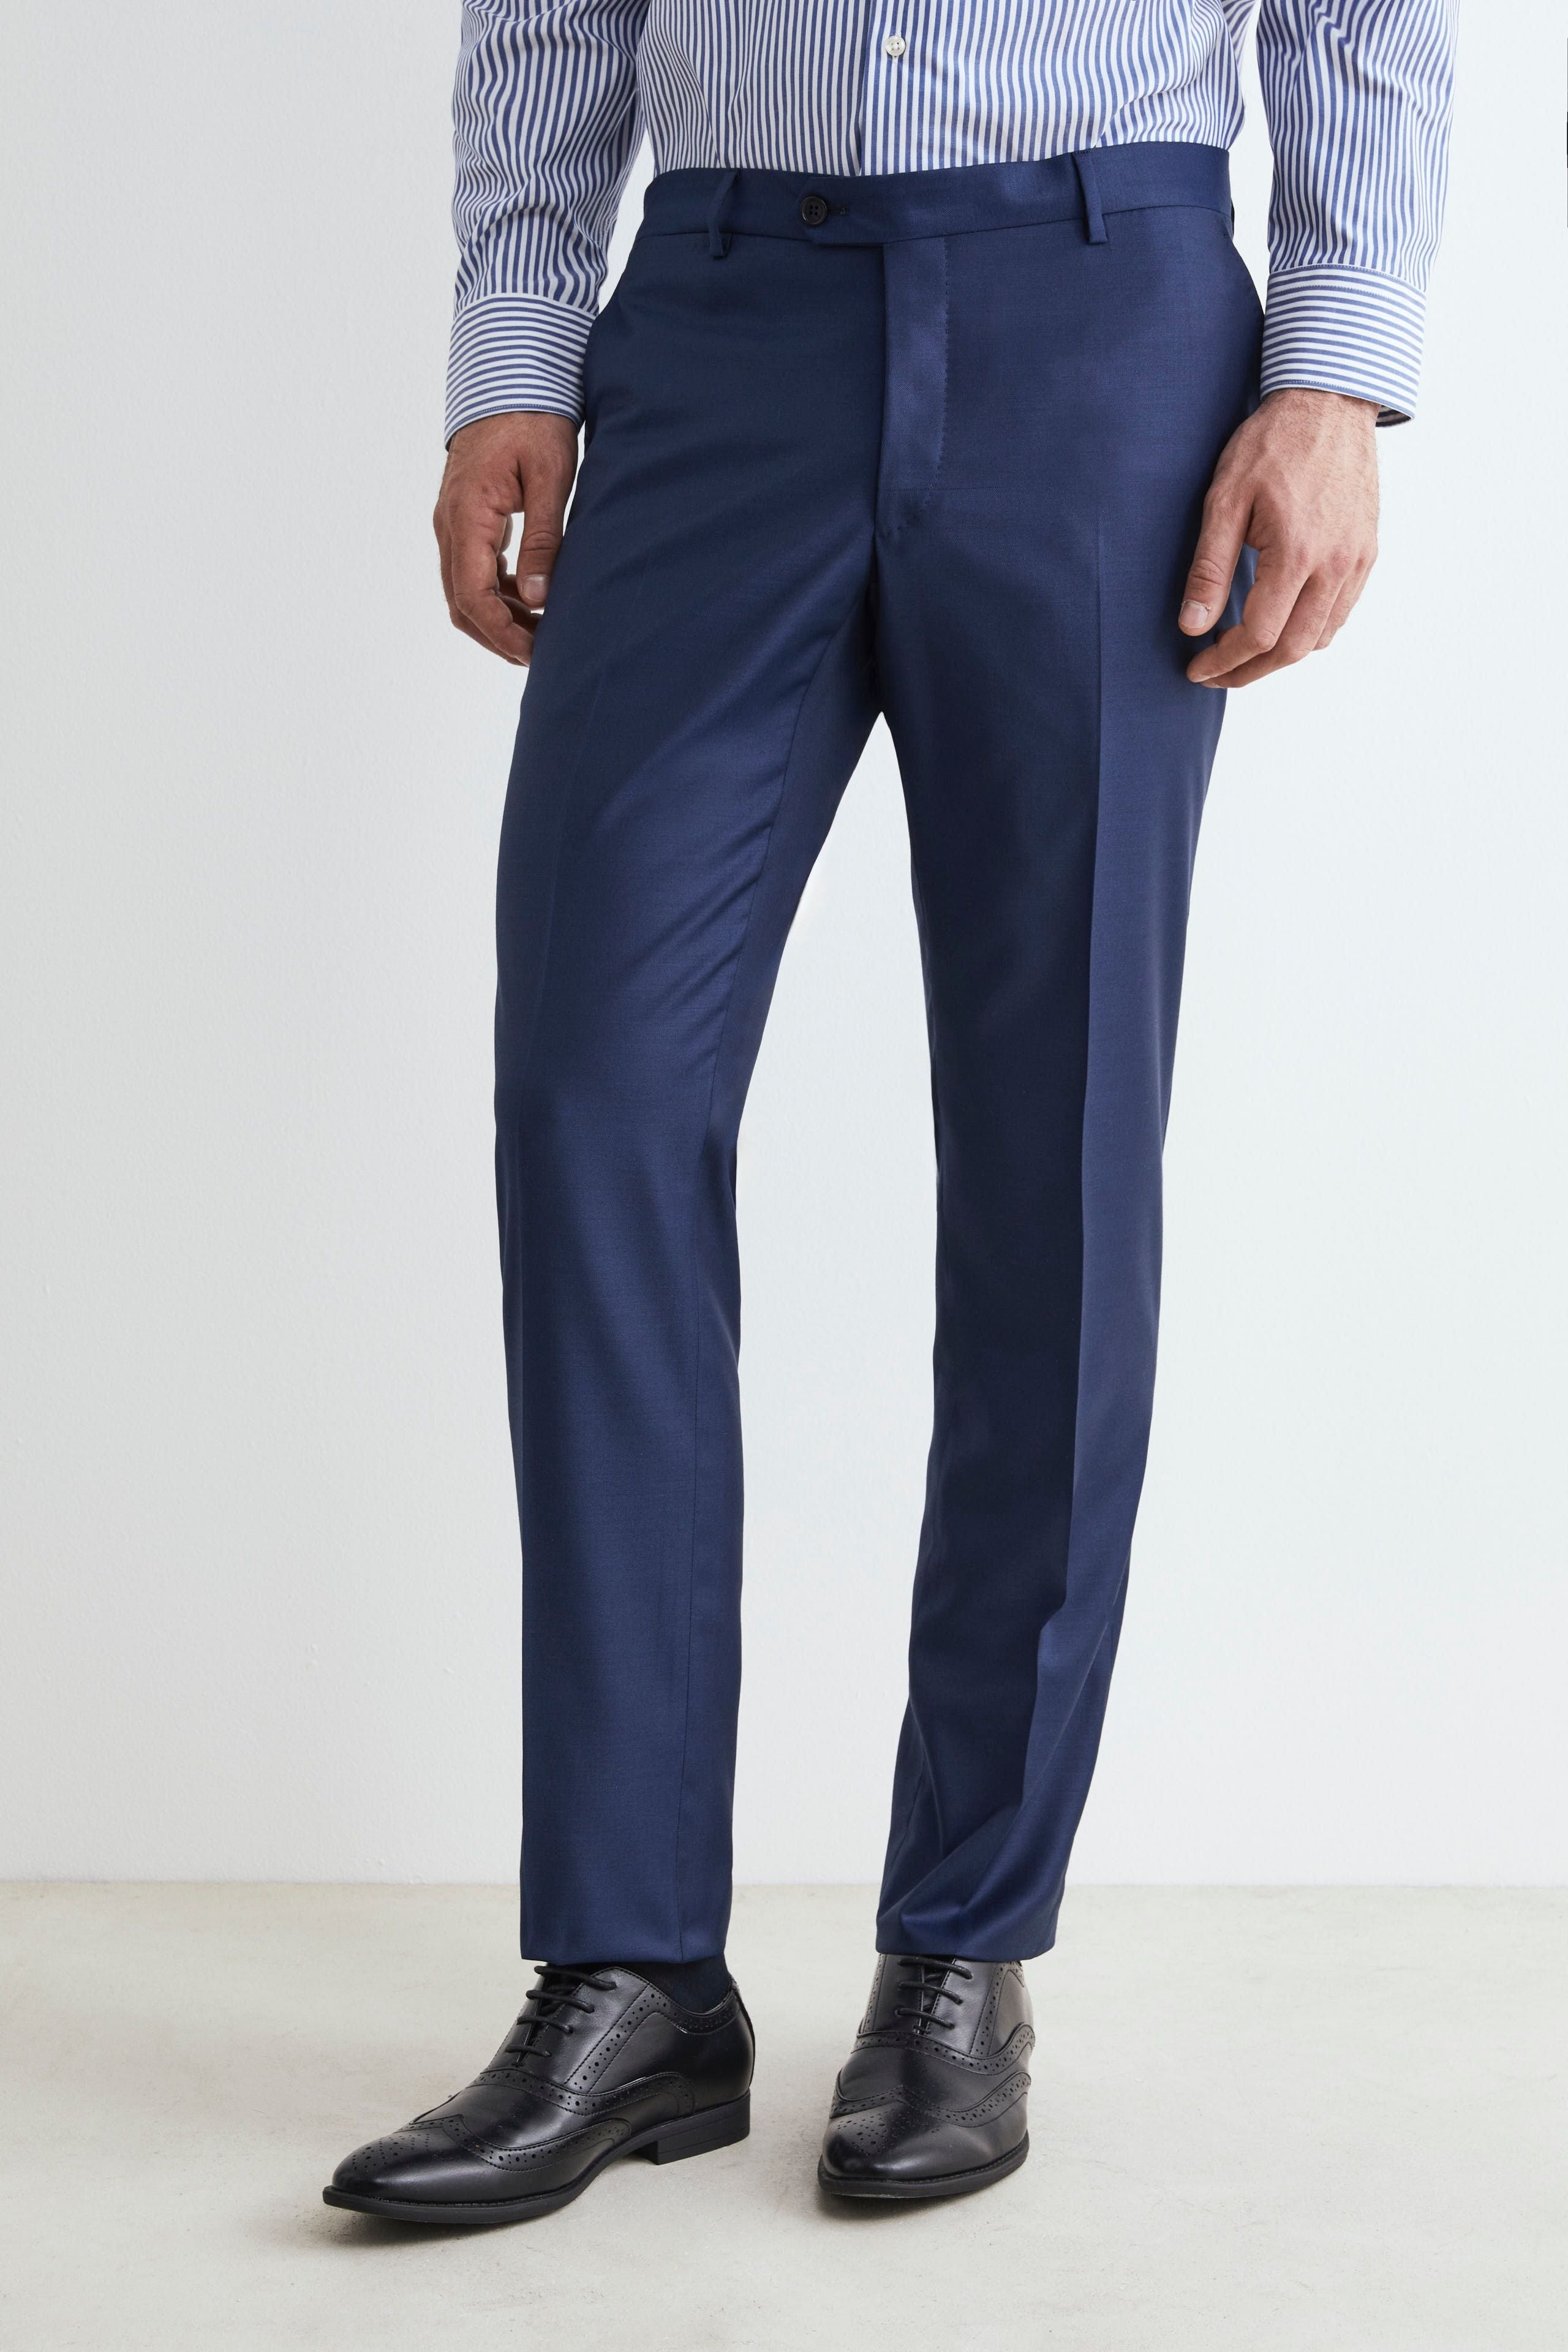 Pantalone elegante drop 8 - BLU